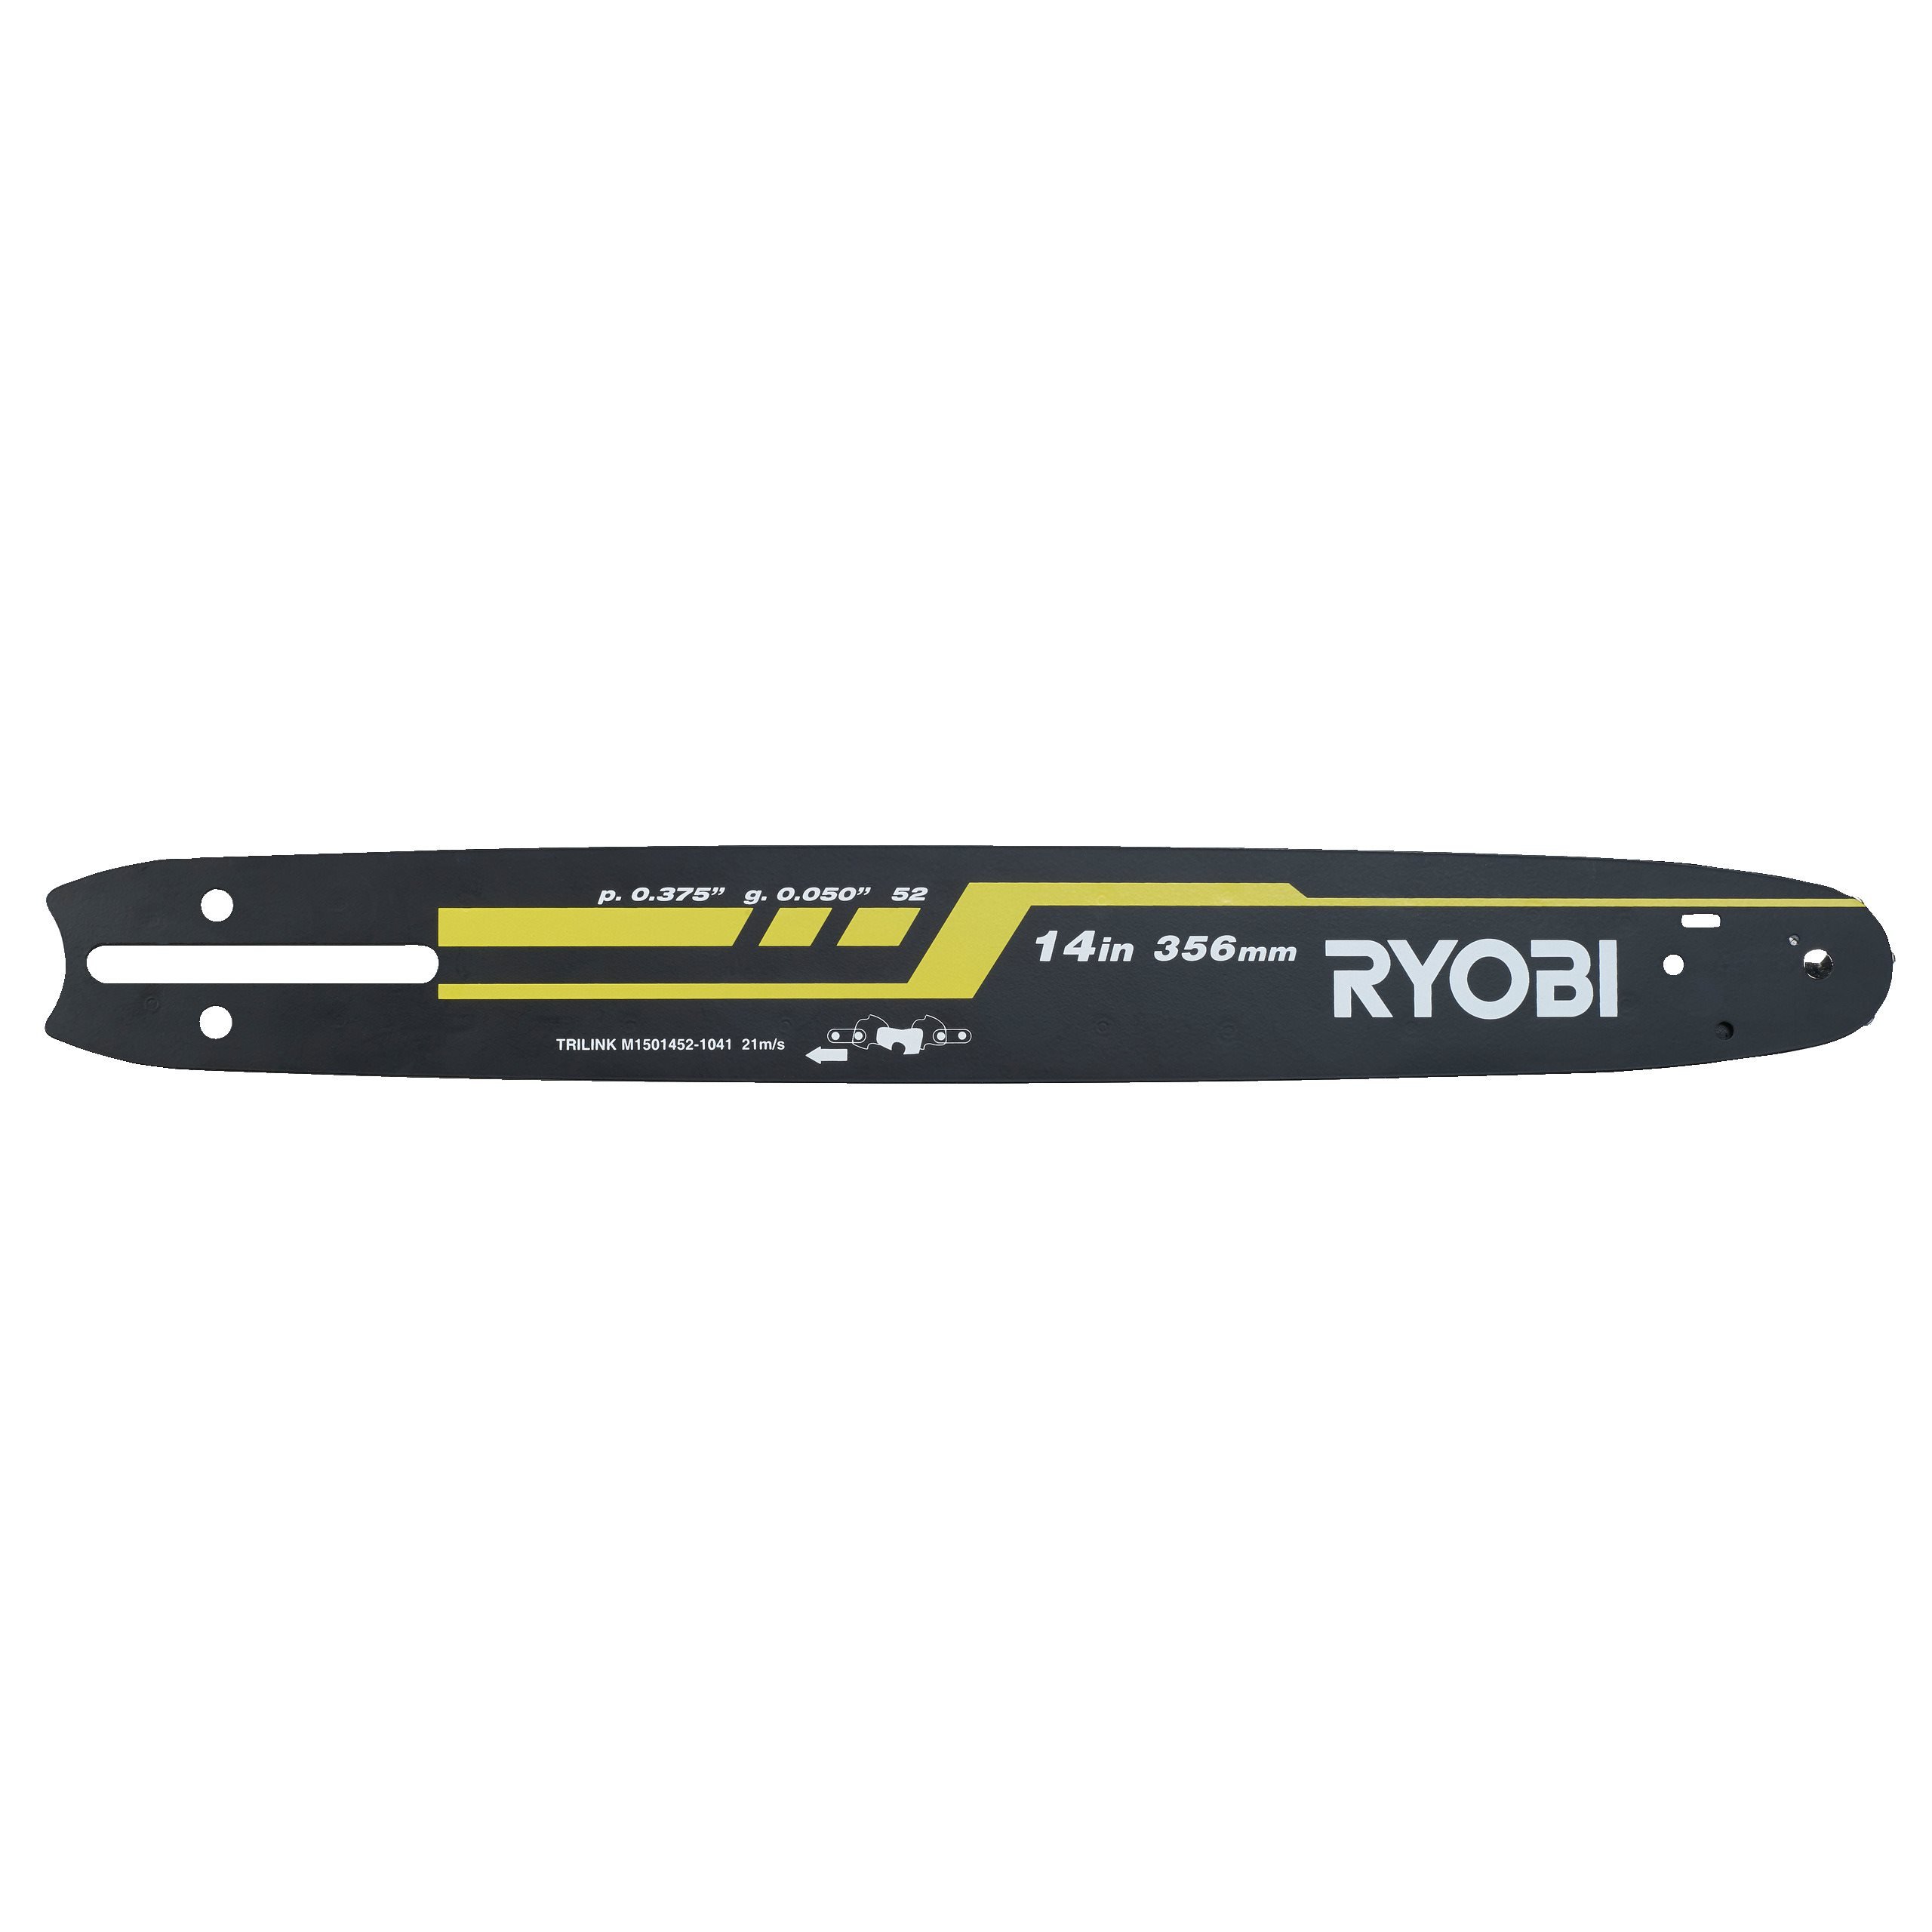 RYOBI Tronçonneuse sans fil Brushless 35 cm 36 V Max Power sans bat